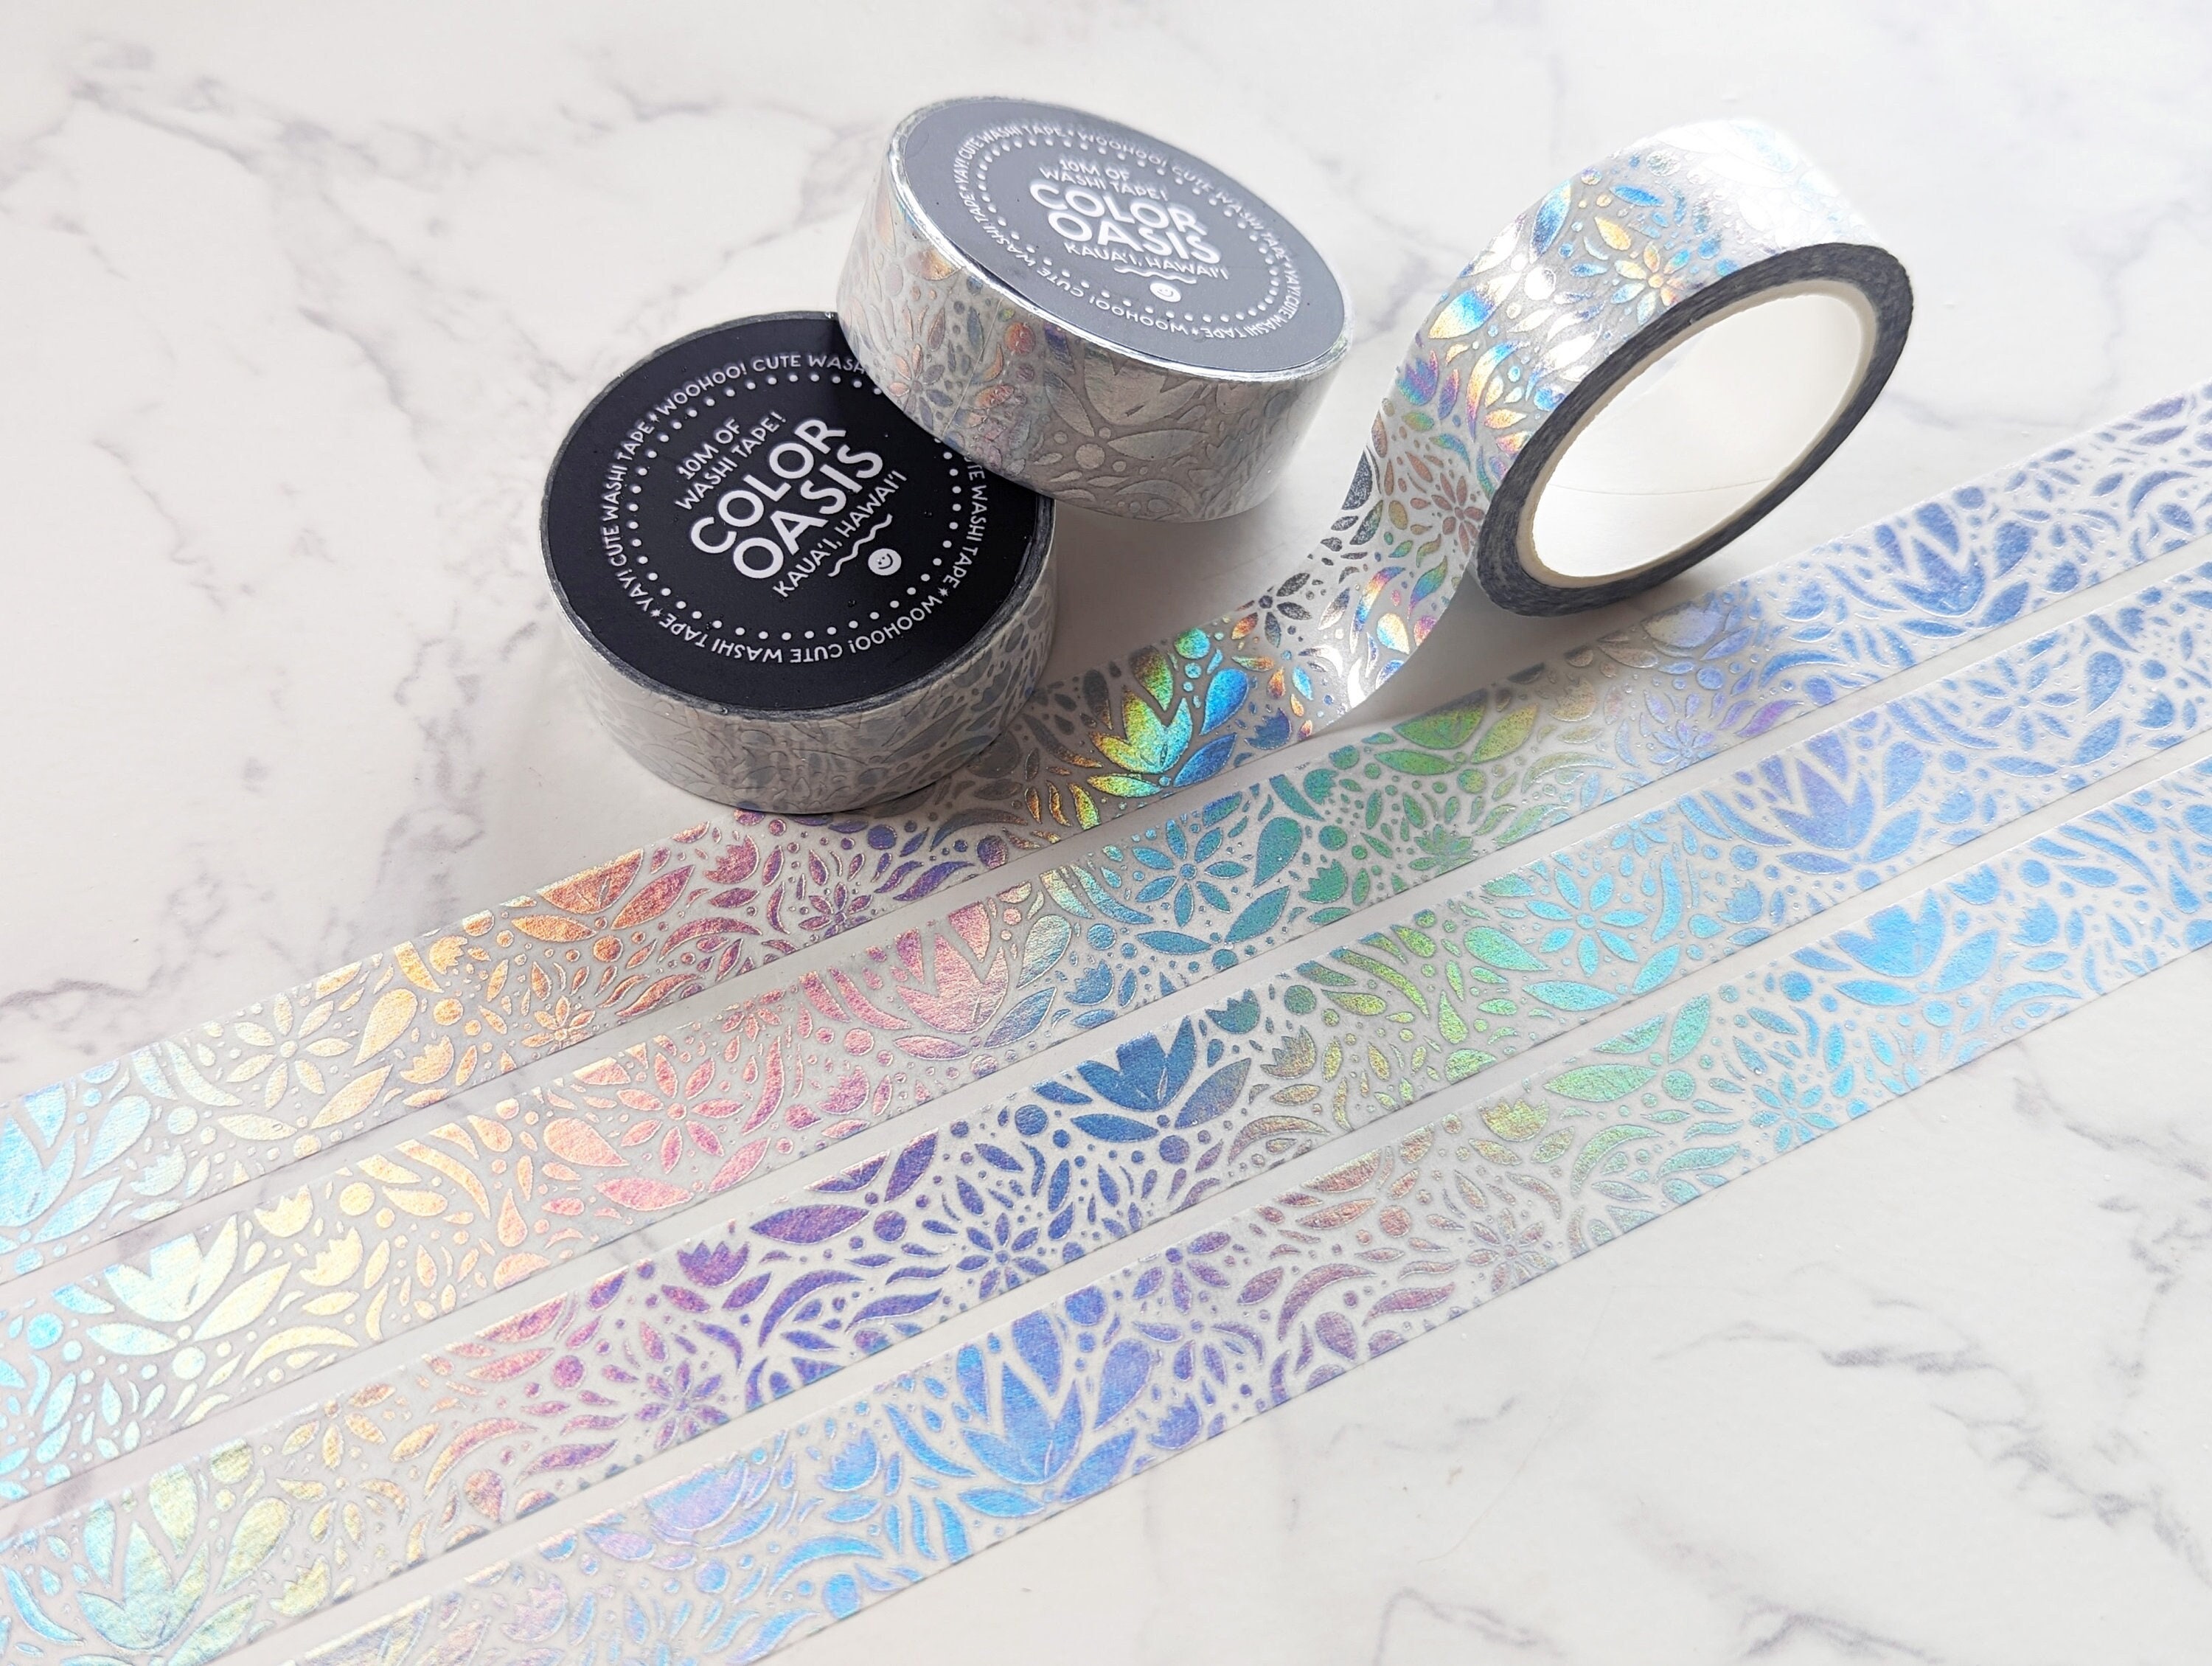 ODM custom raised silver holographic foil washi tape manufacturer